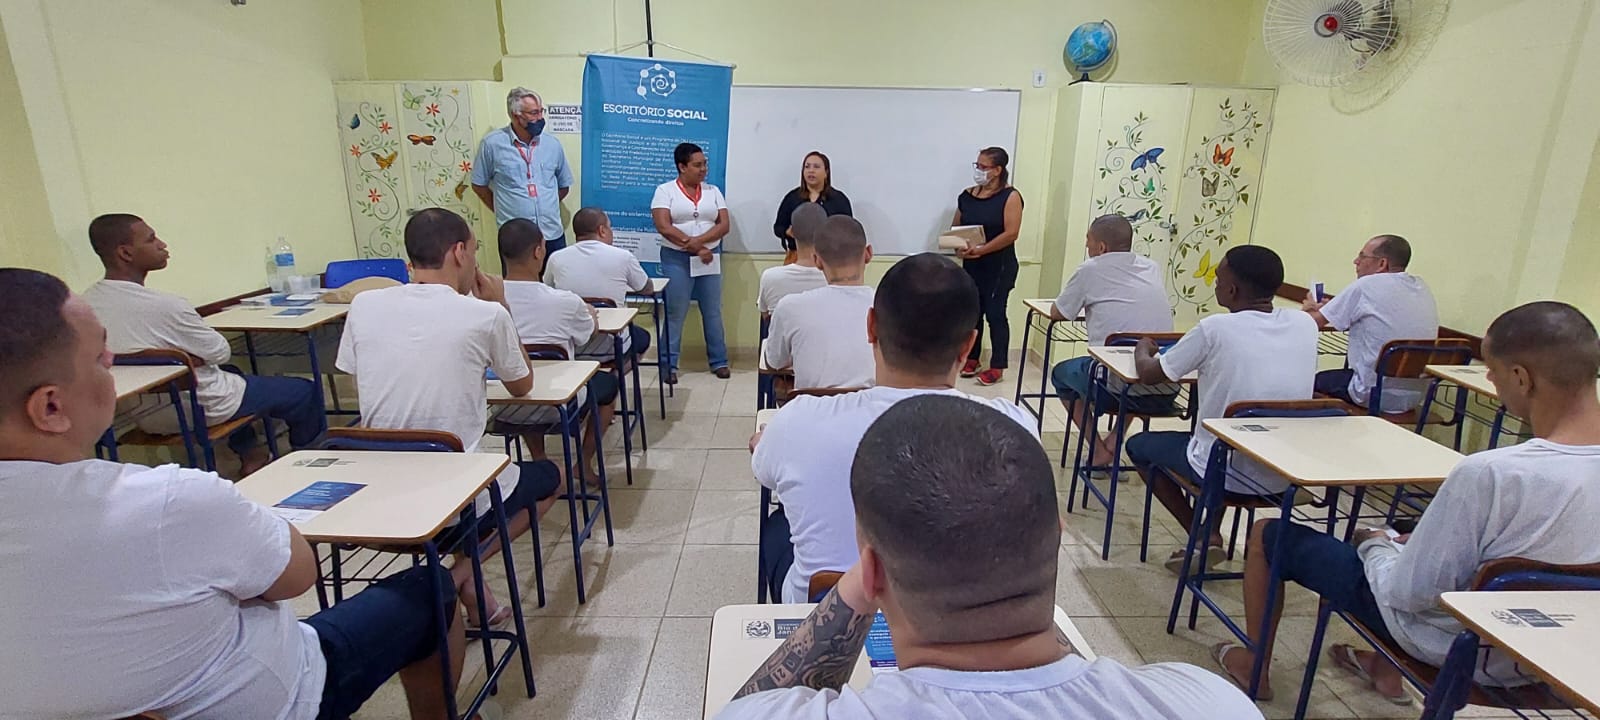 Prefeitura apresenta programa Escritorio Social de Marica em presidio do Rio